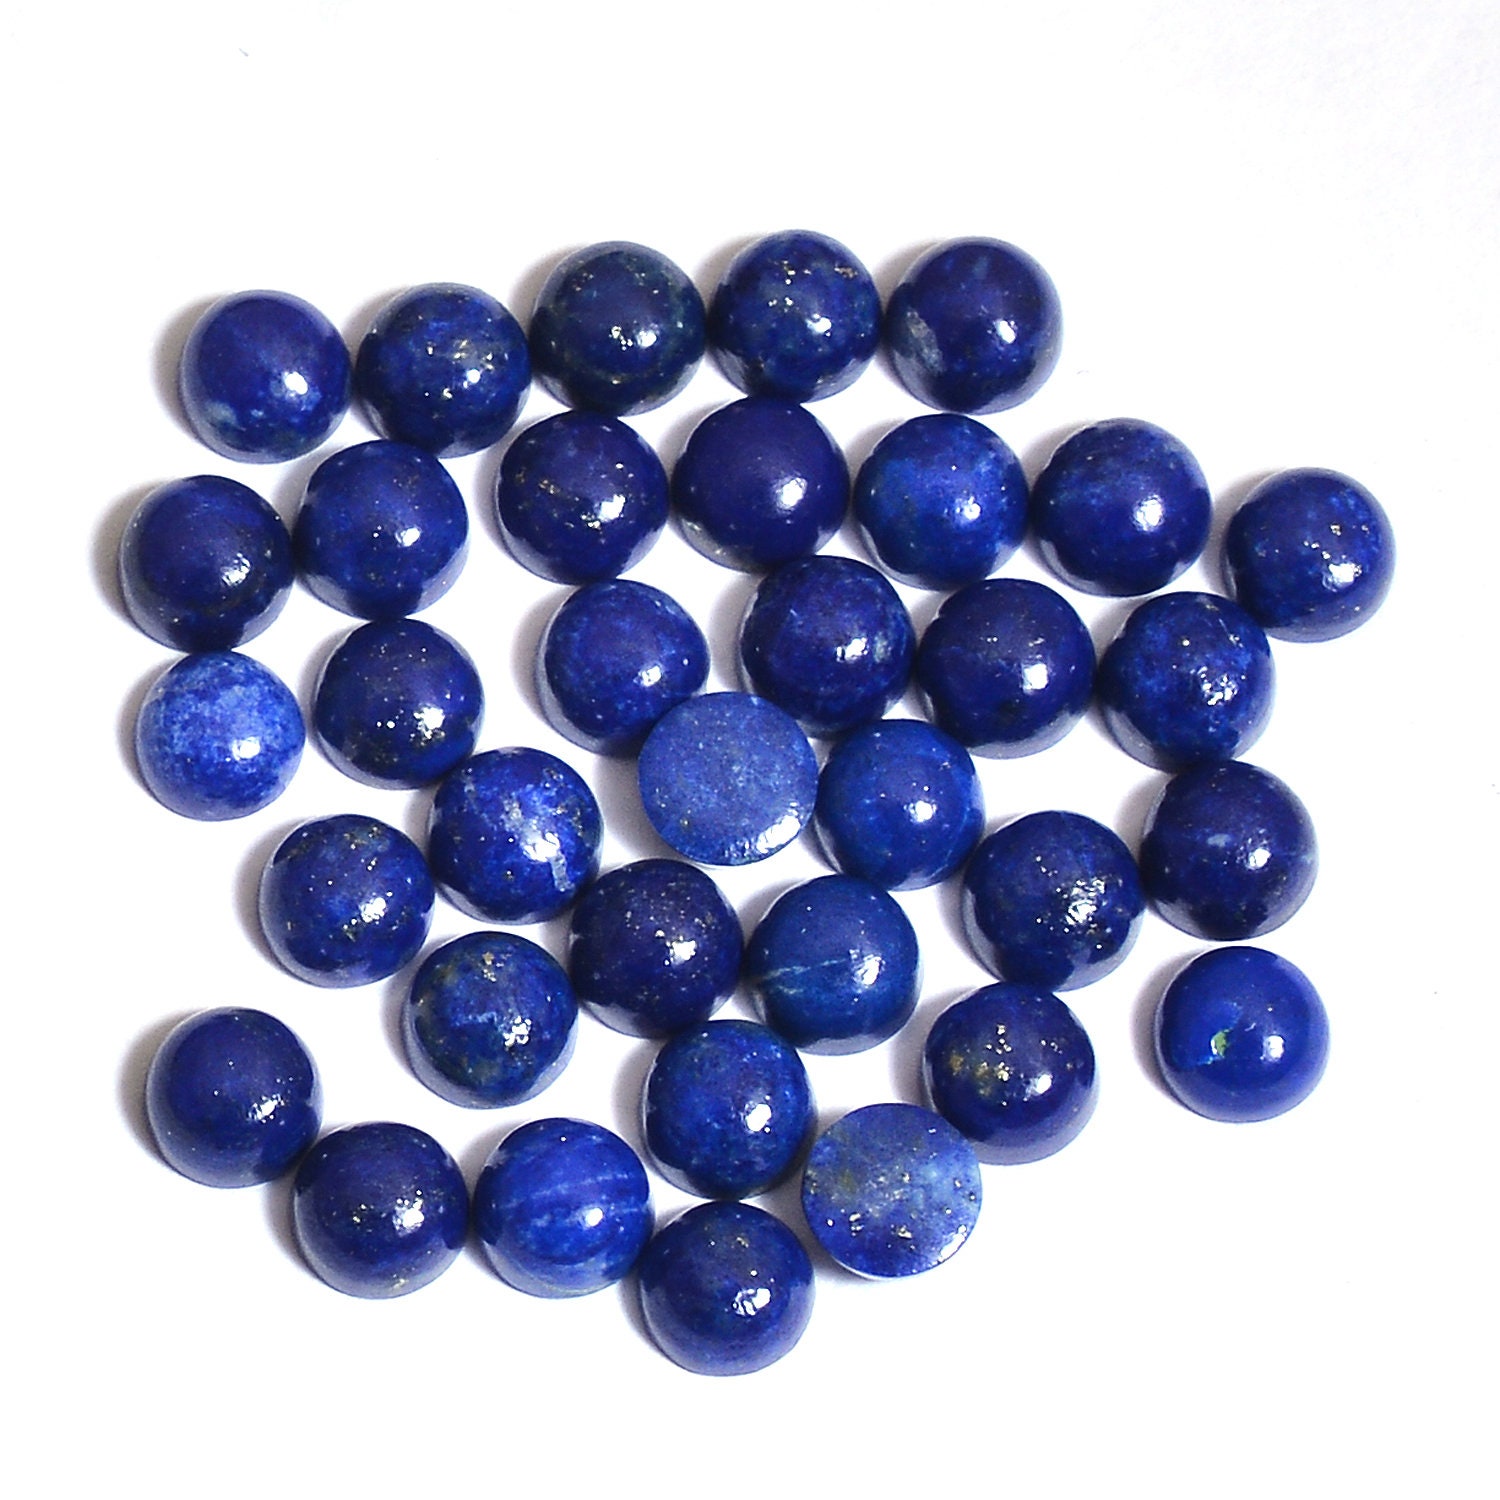 Lapis Lazuli Gemstone 6mm Round Smooth Cabochon Lot AAA - Etsy